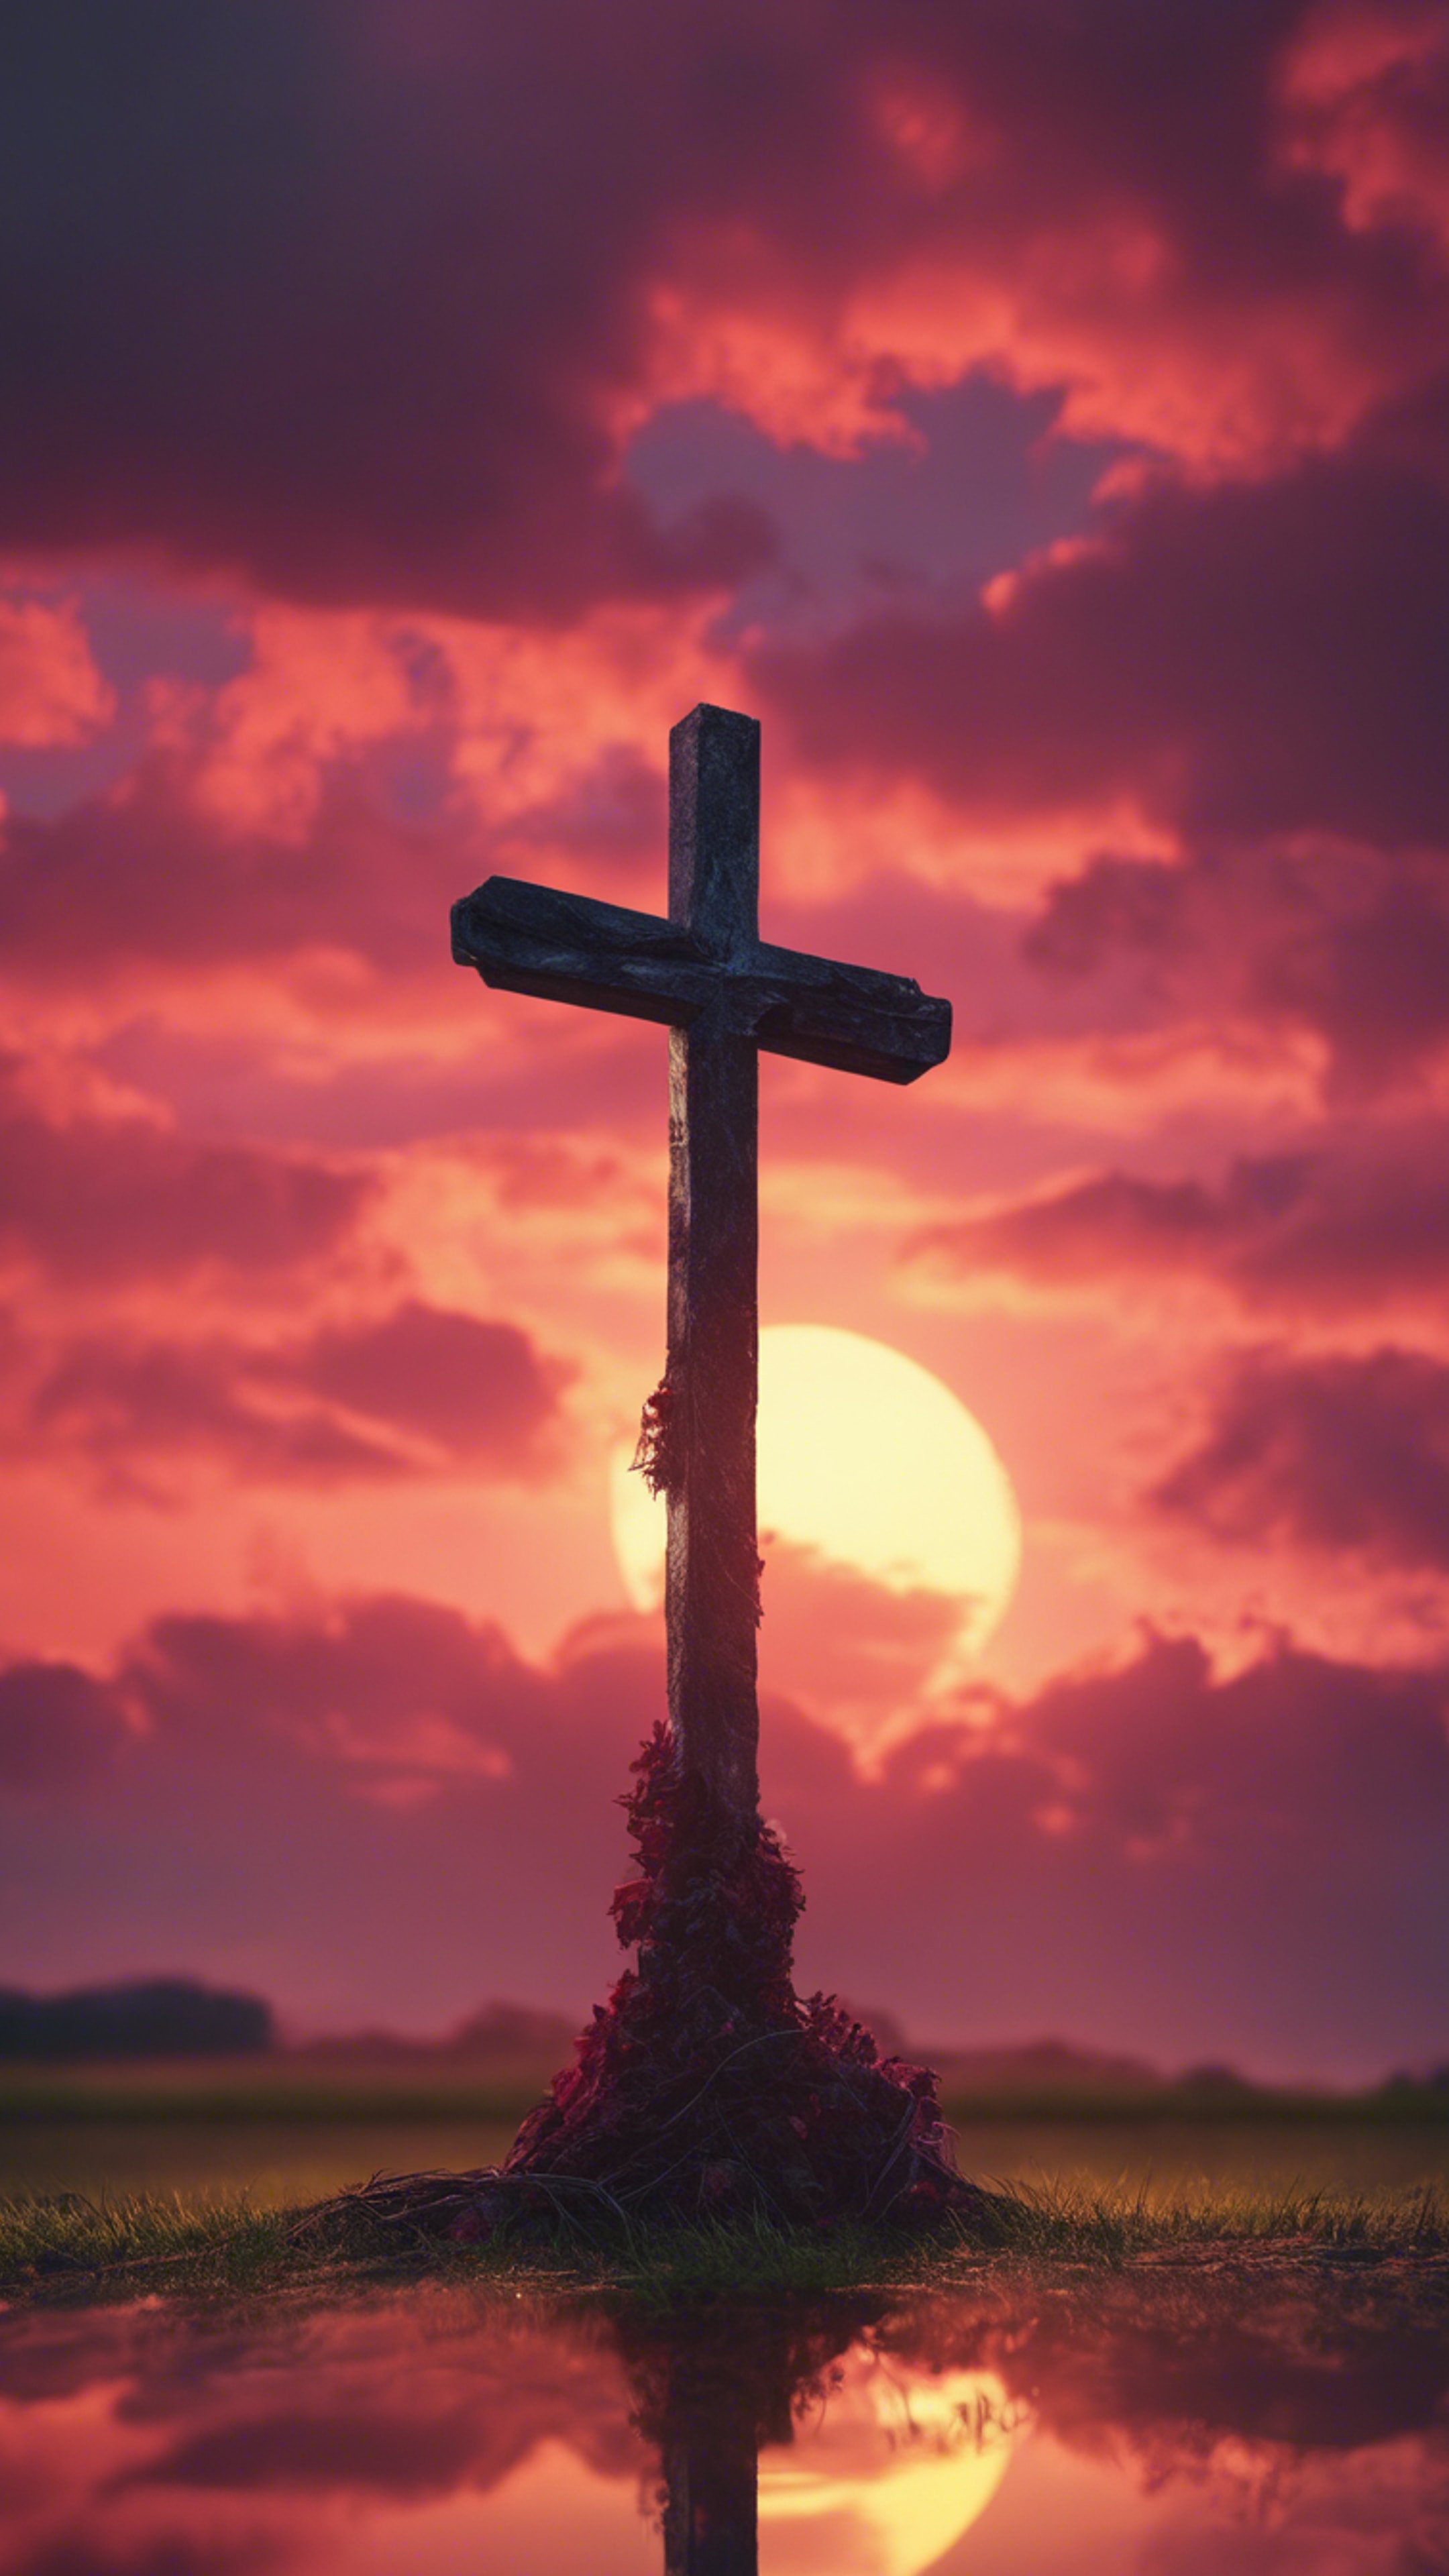 A cross standing against the crimson colors of a sunset sky. Tapeta[b41808c7967b41aa9e40]